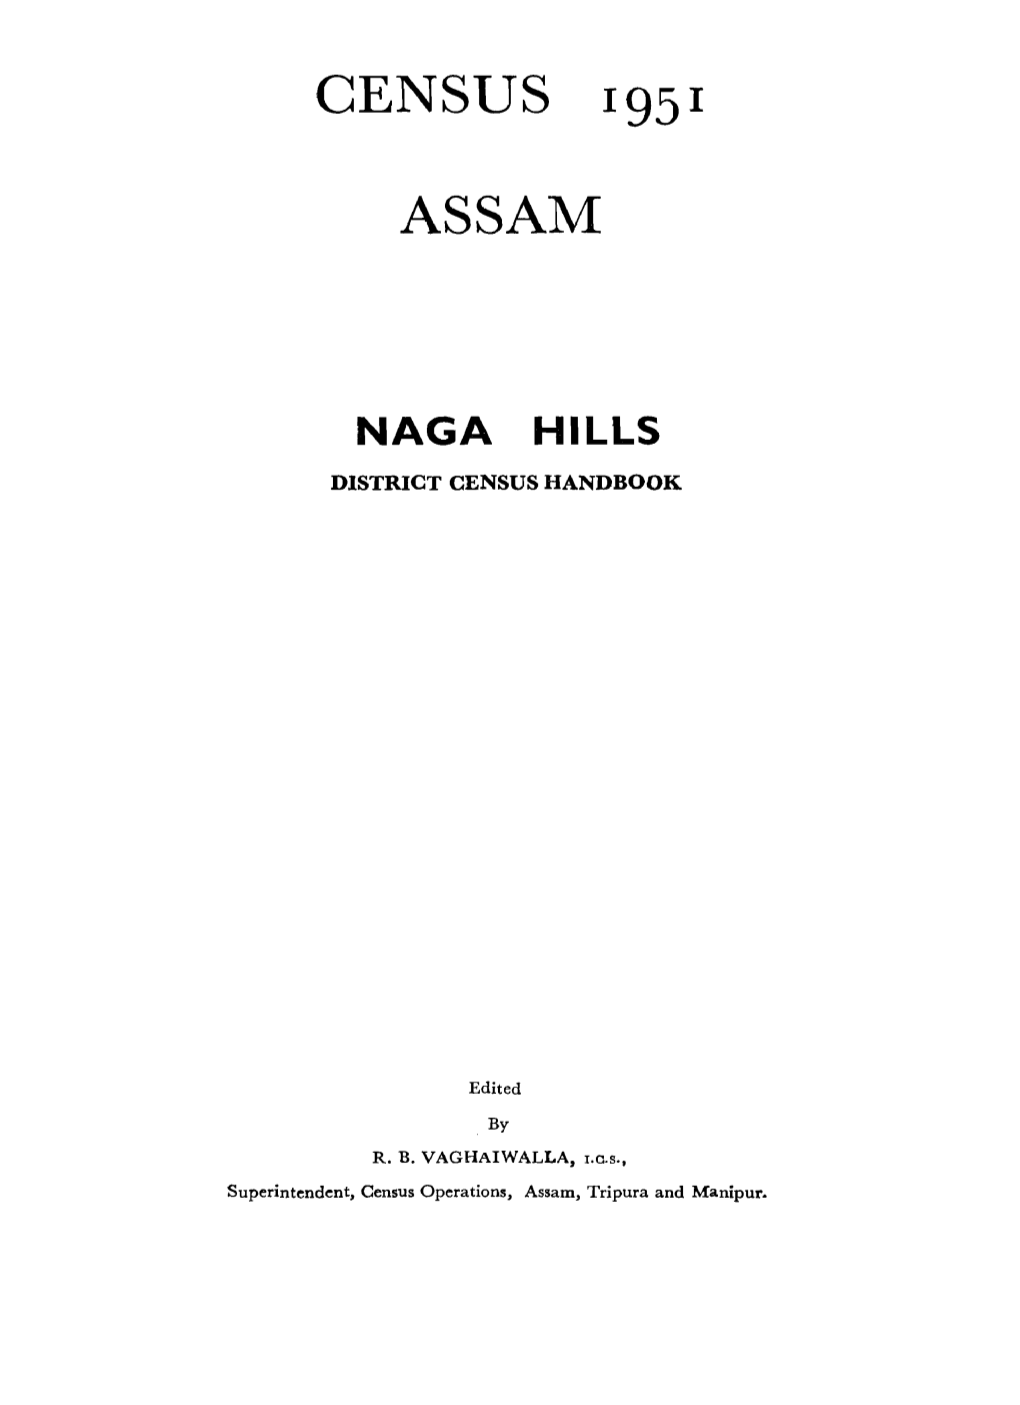 Naga Hills District Census Handbook